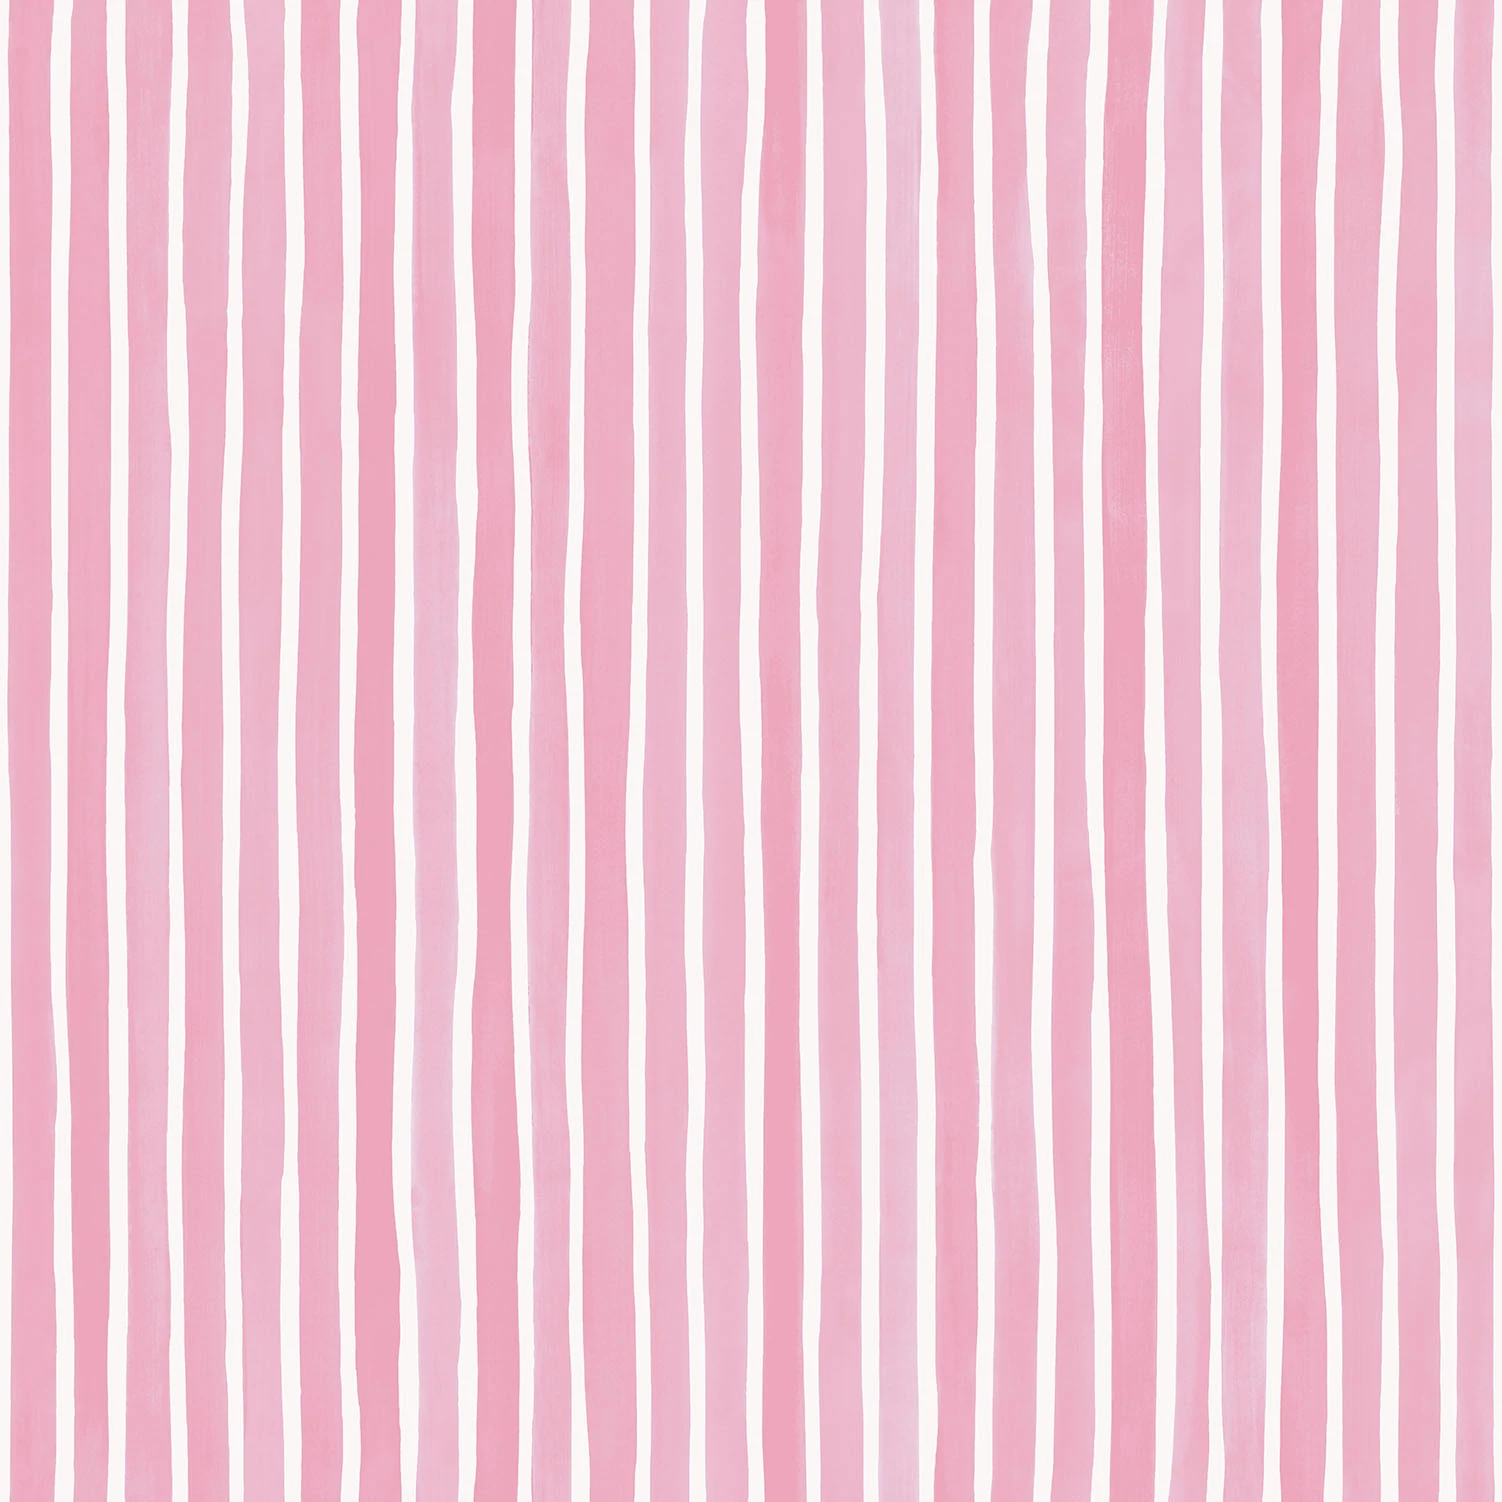 Croquet Stripe Tapete - 110/5029 - Cole&Son - Marquee Stripes